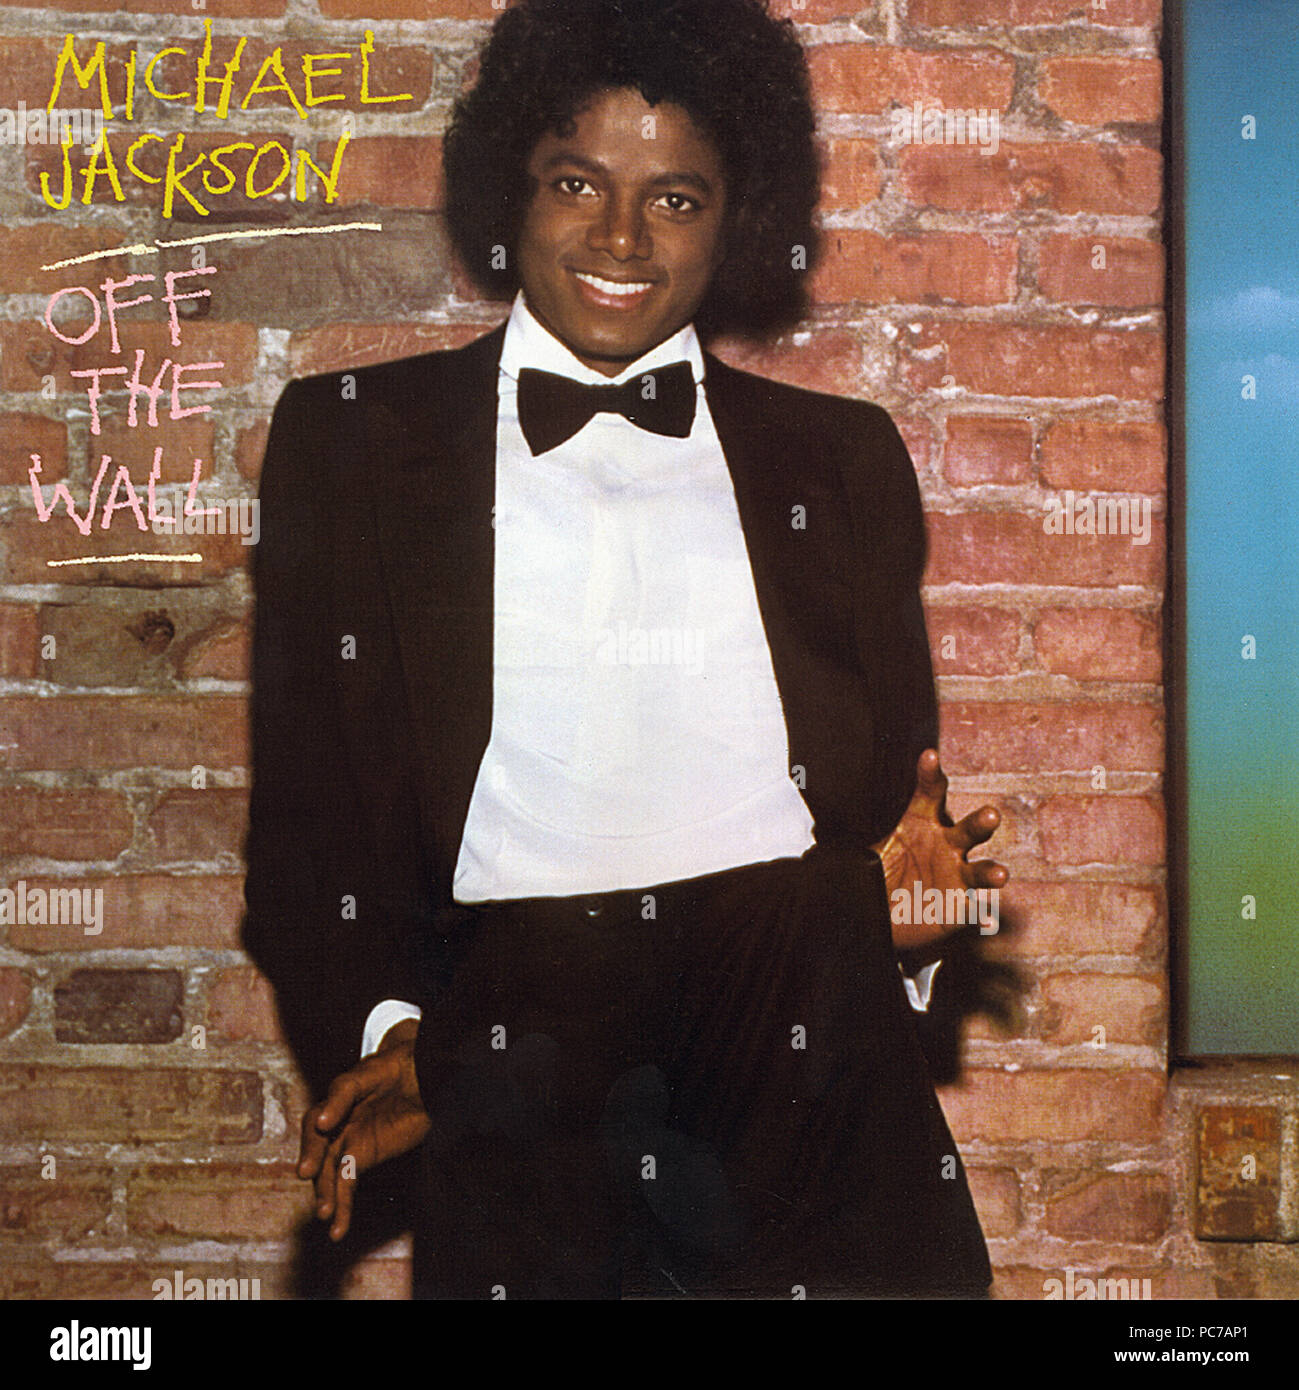 Michael Jackson – Off the Wall - vintage vinyl cover album (Front Stock  Photo - Alamy